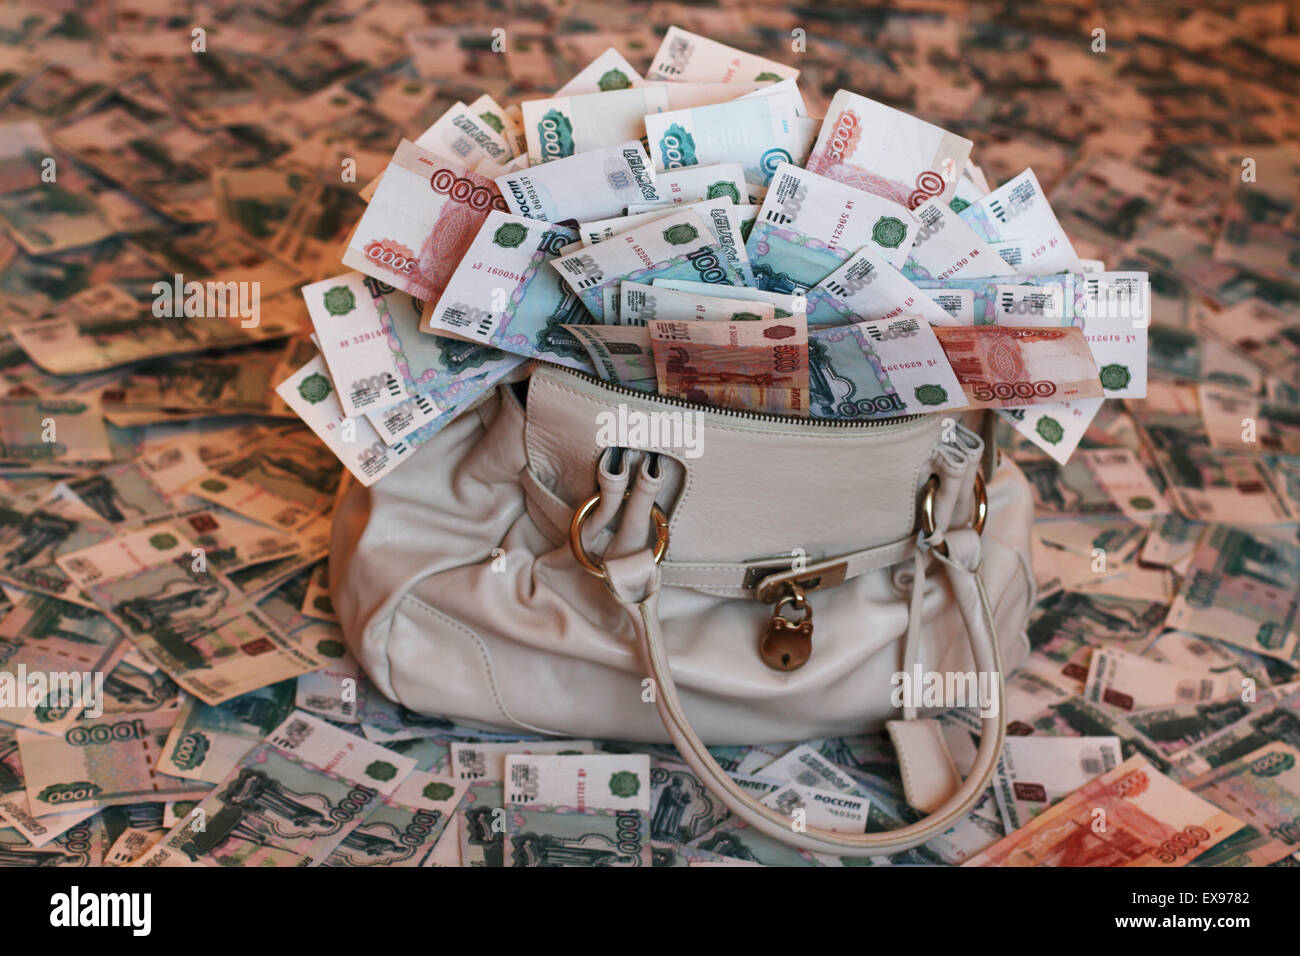 Sack bag full of money in the room Stock Photo - Alamy